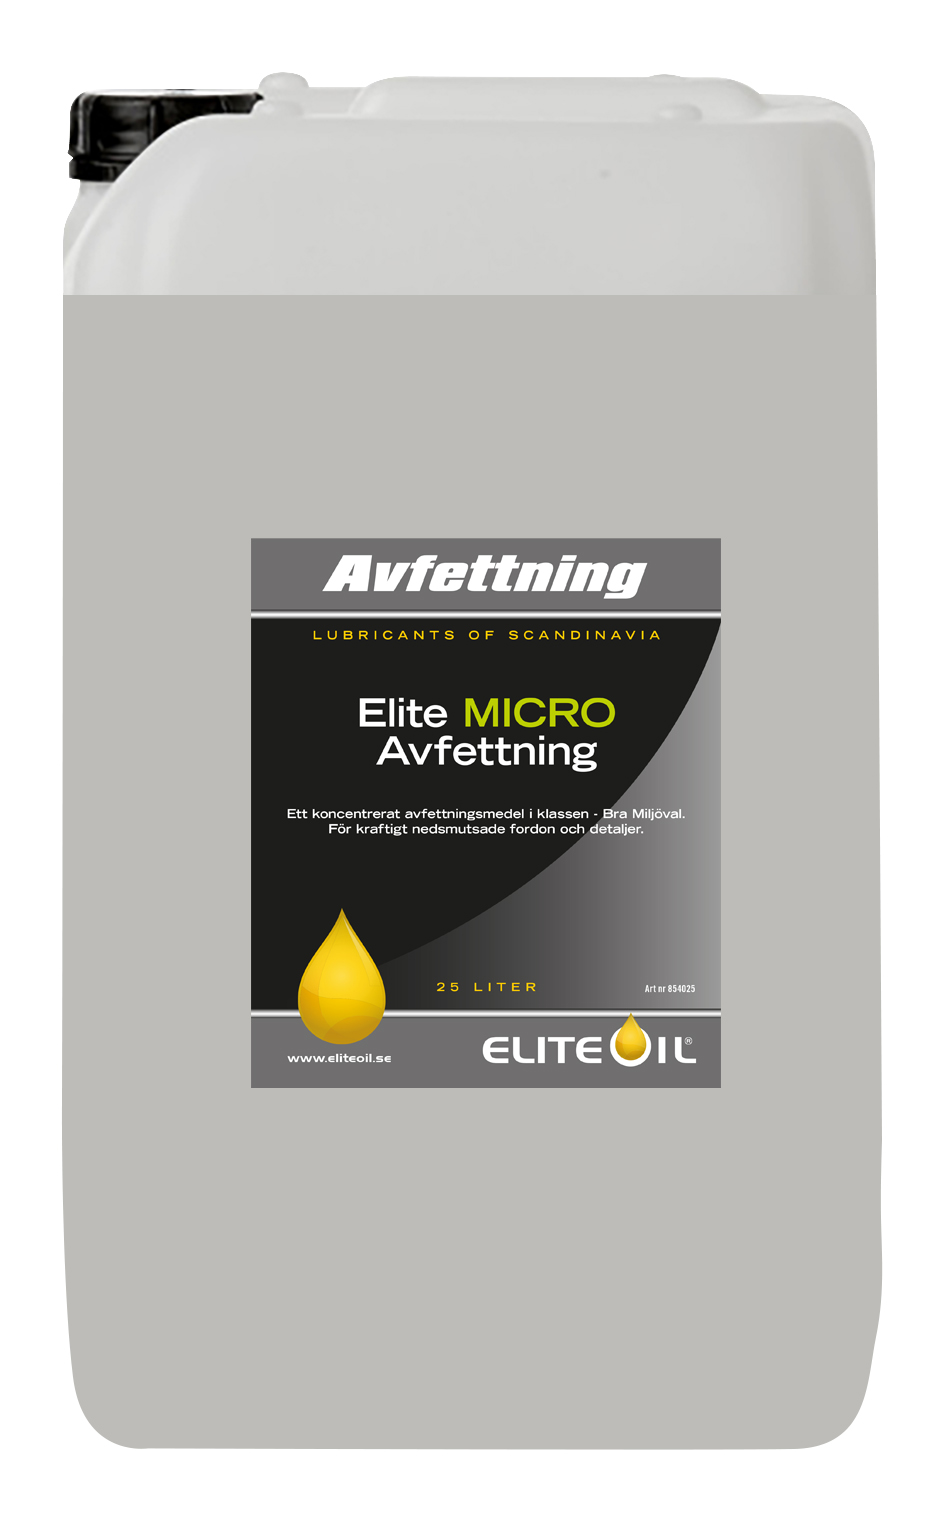 Elite Micro Avfettning, 25 liter dunk-image